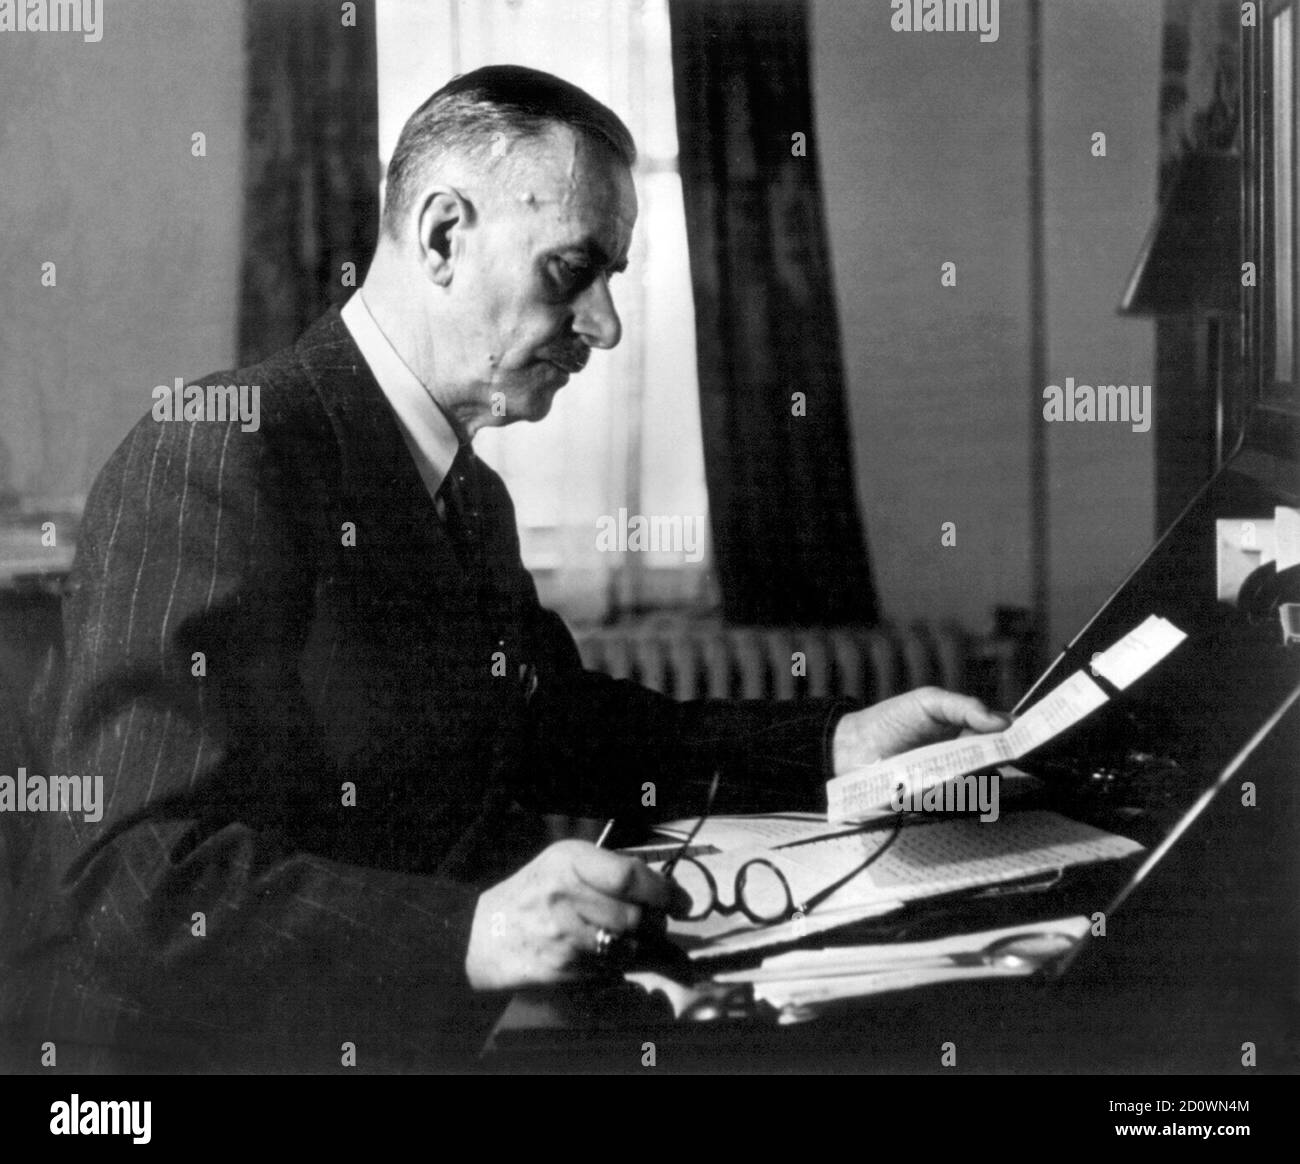 Thomas Mann. Retrato del escritor alemán Paul Thomas Mann (1875-1955), c.1945 Foto de stock